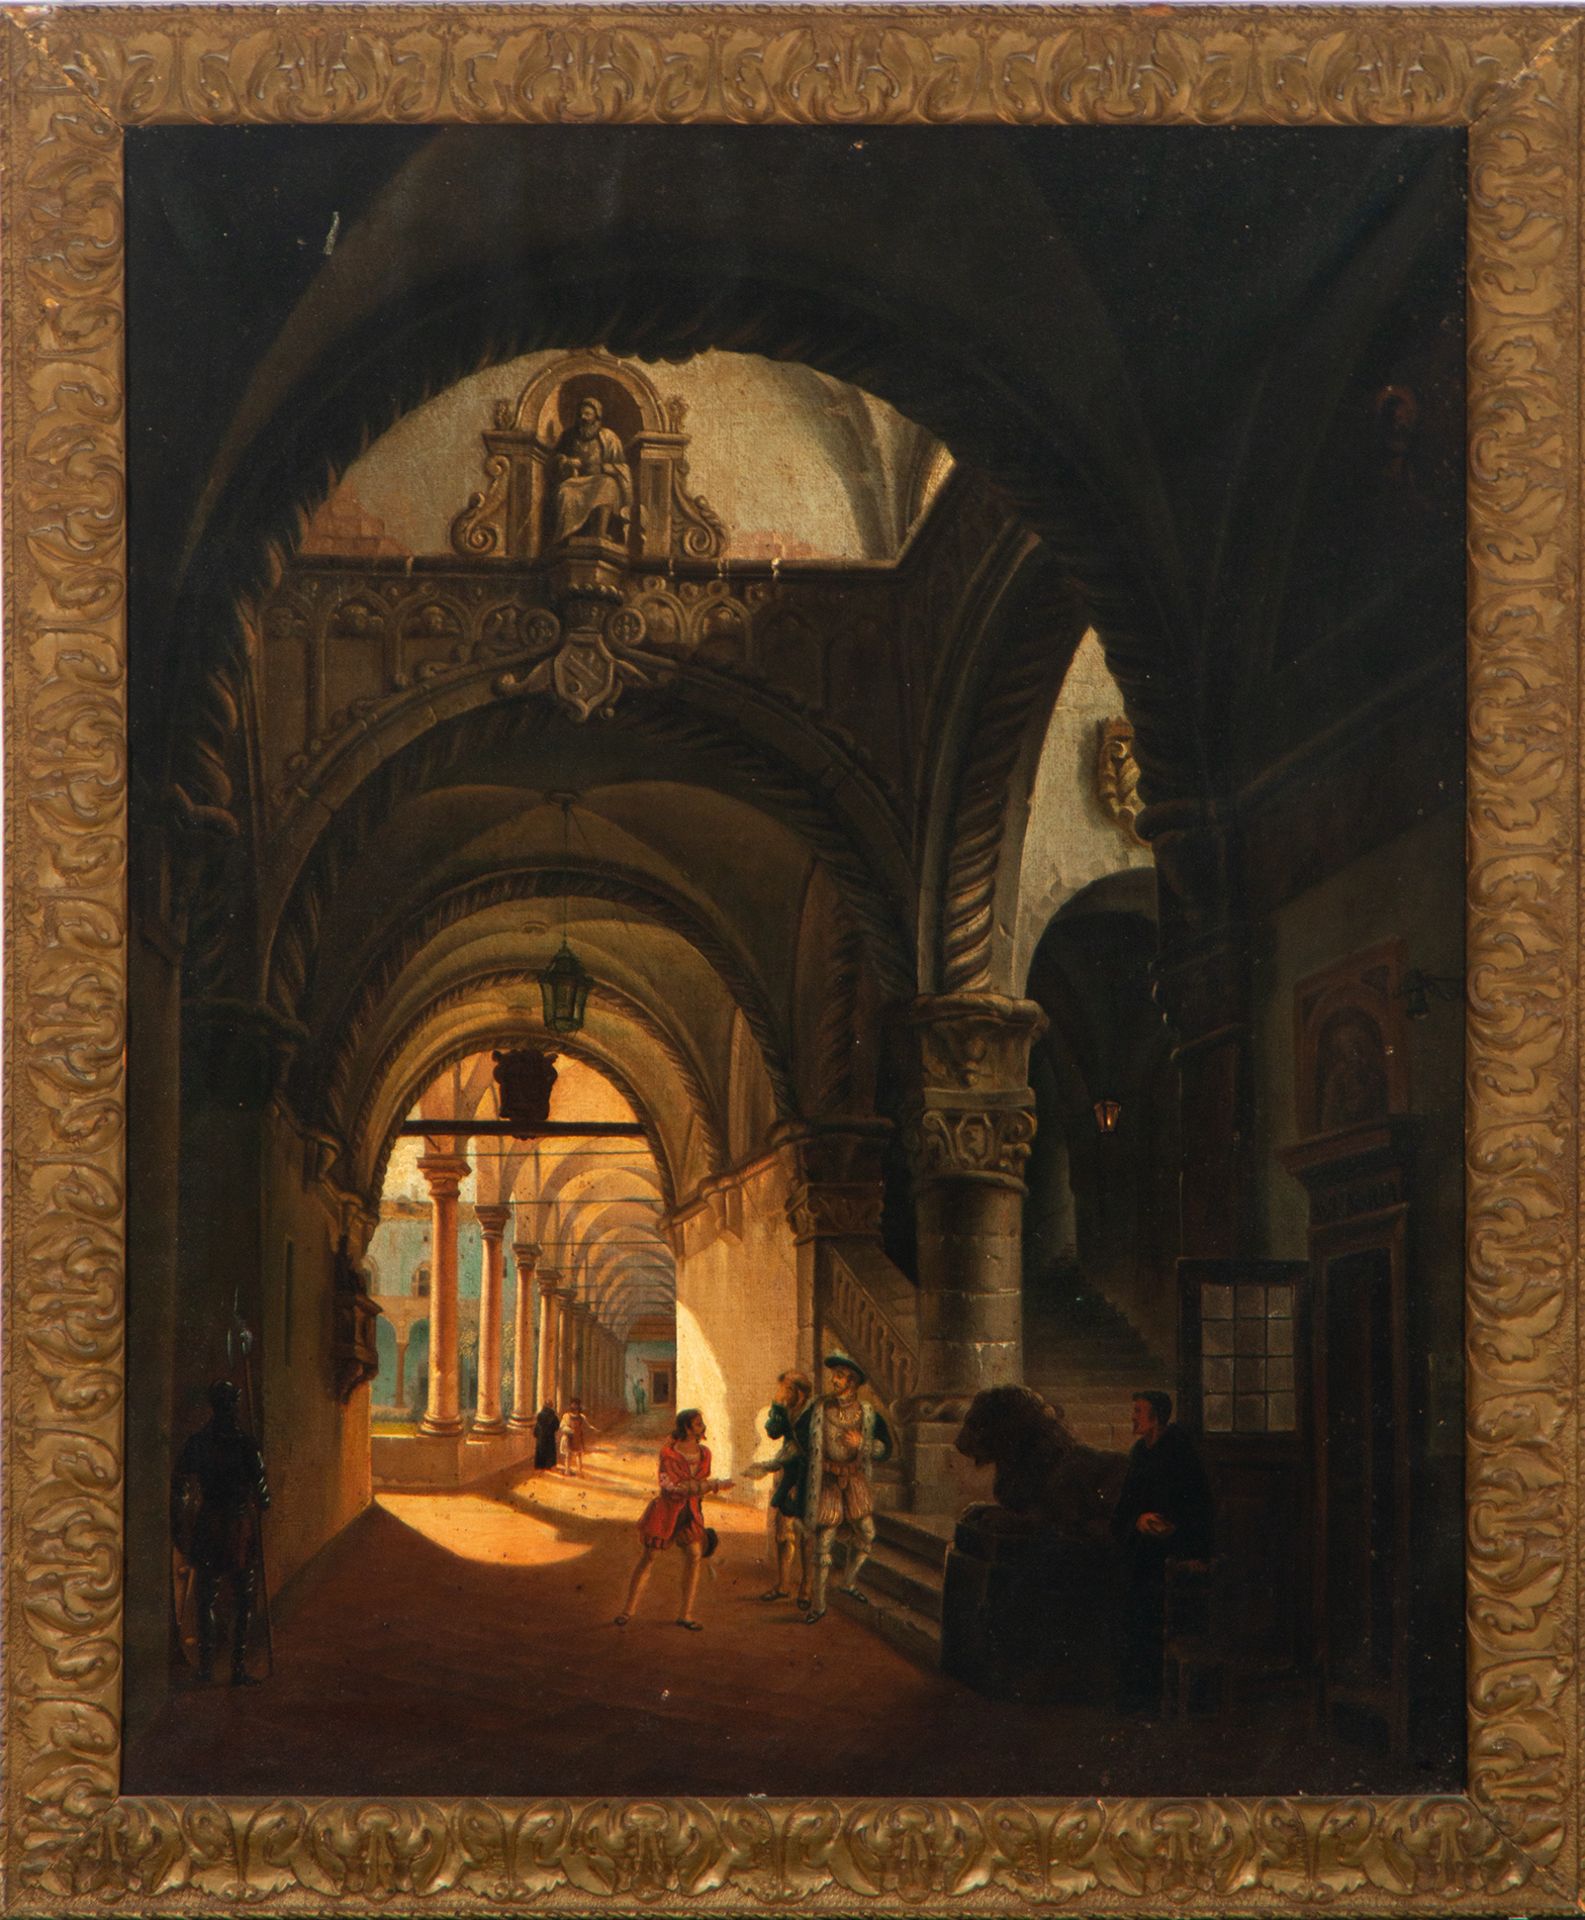 Interior of a Palace, 19th century Spanish school, following Renaissance models